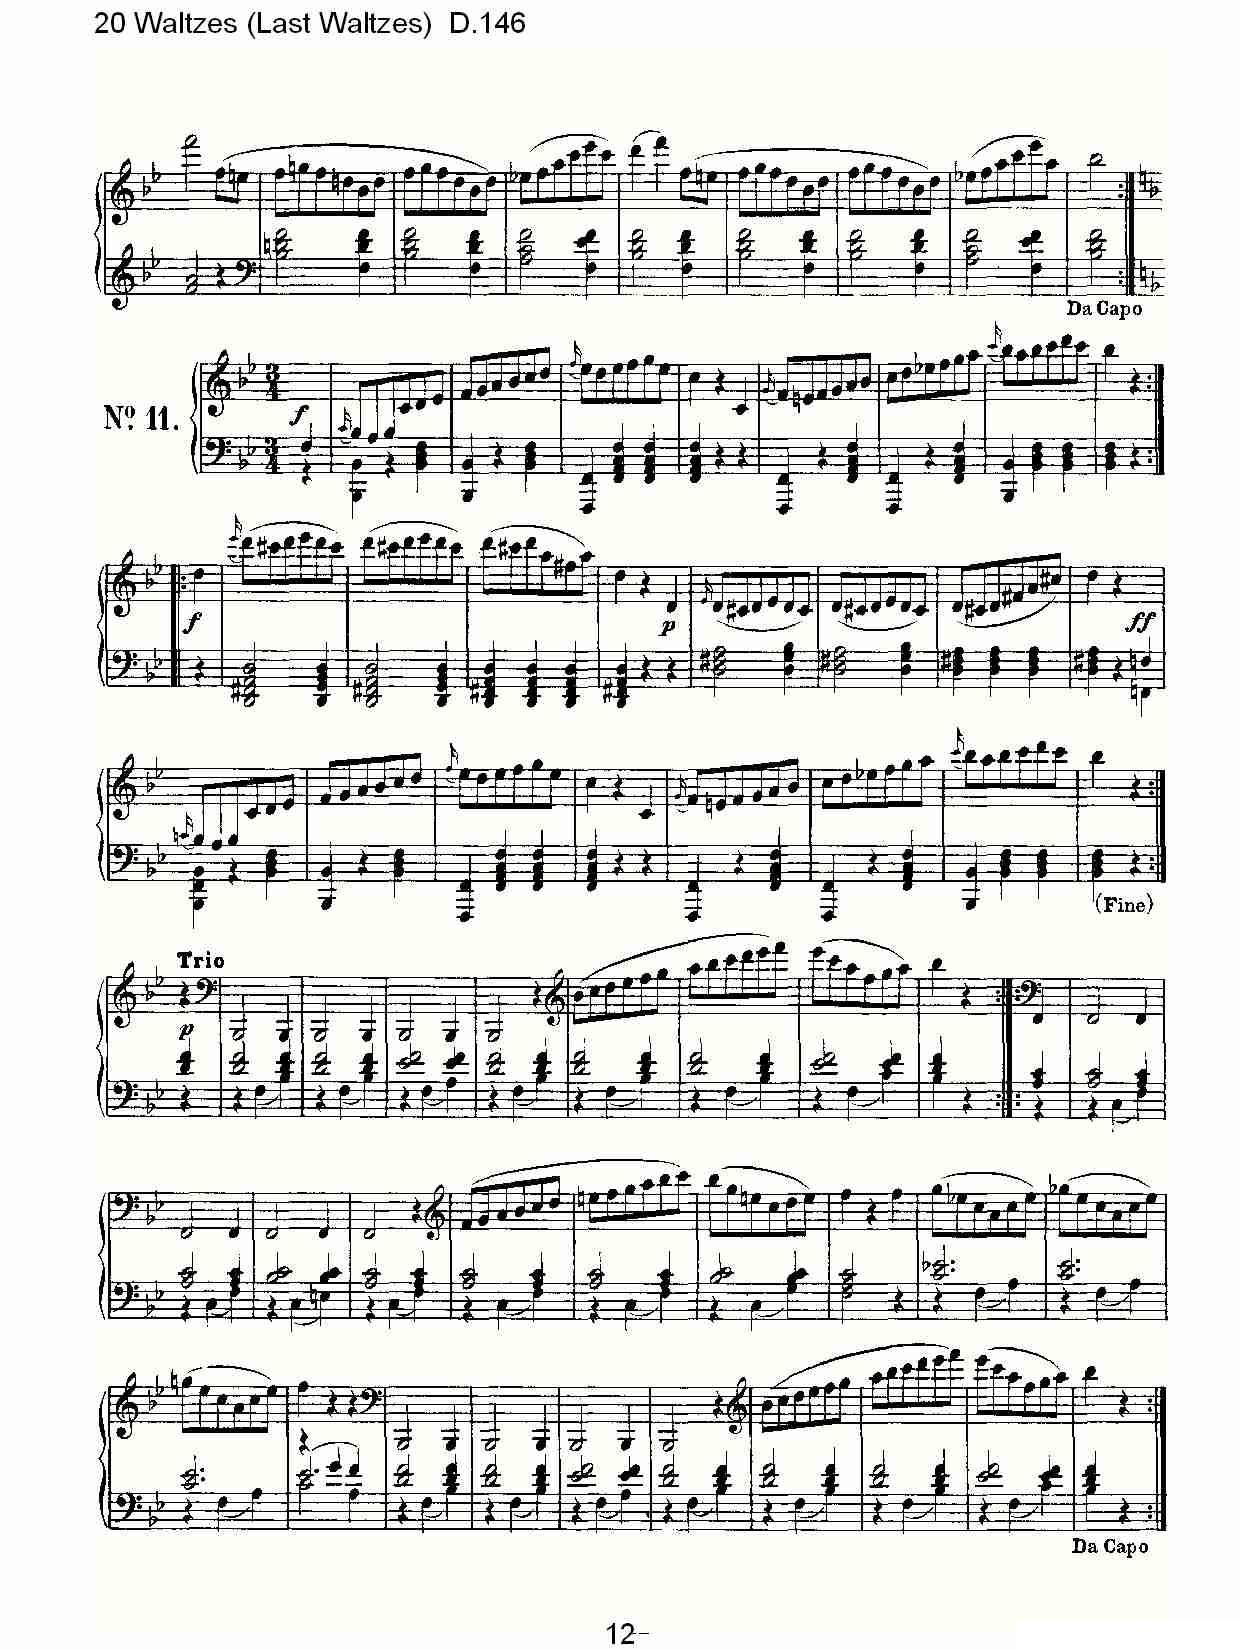 20 Waltzes（Last Waltzes) D.14）钢琴曲谱（图12）